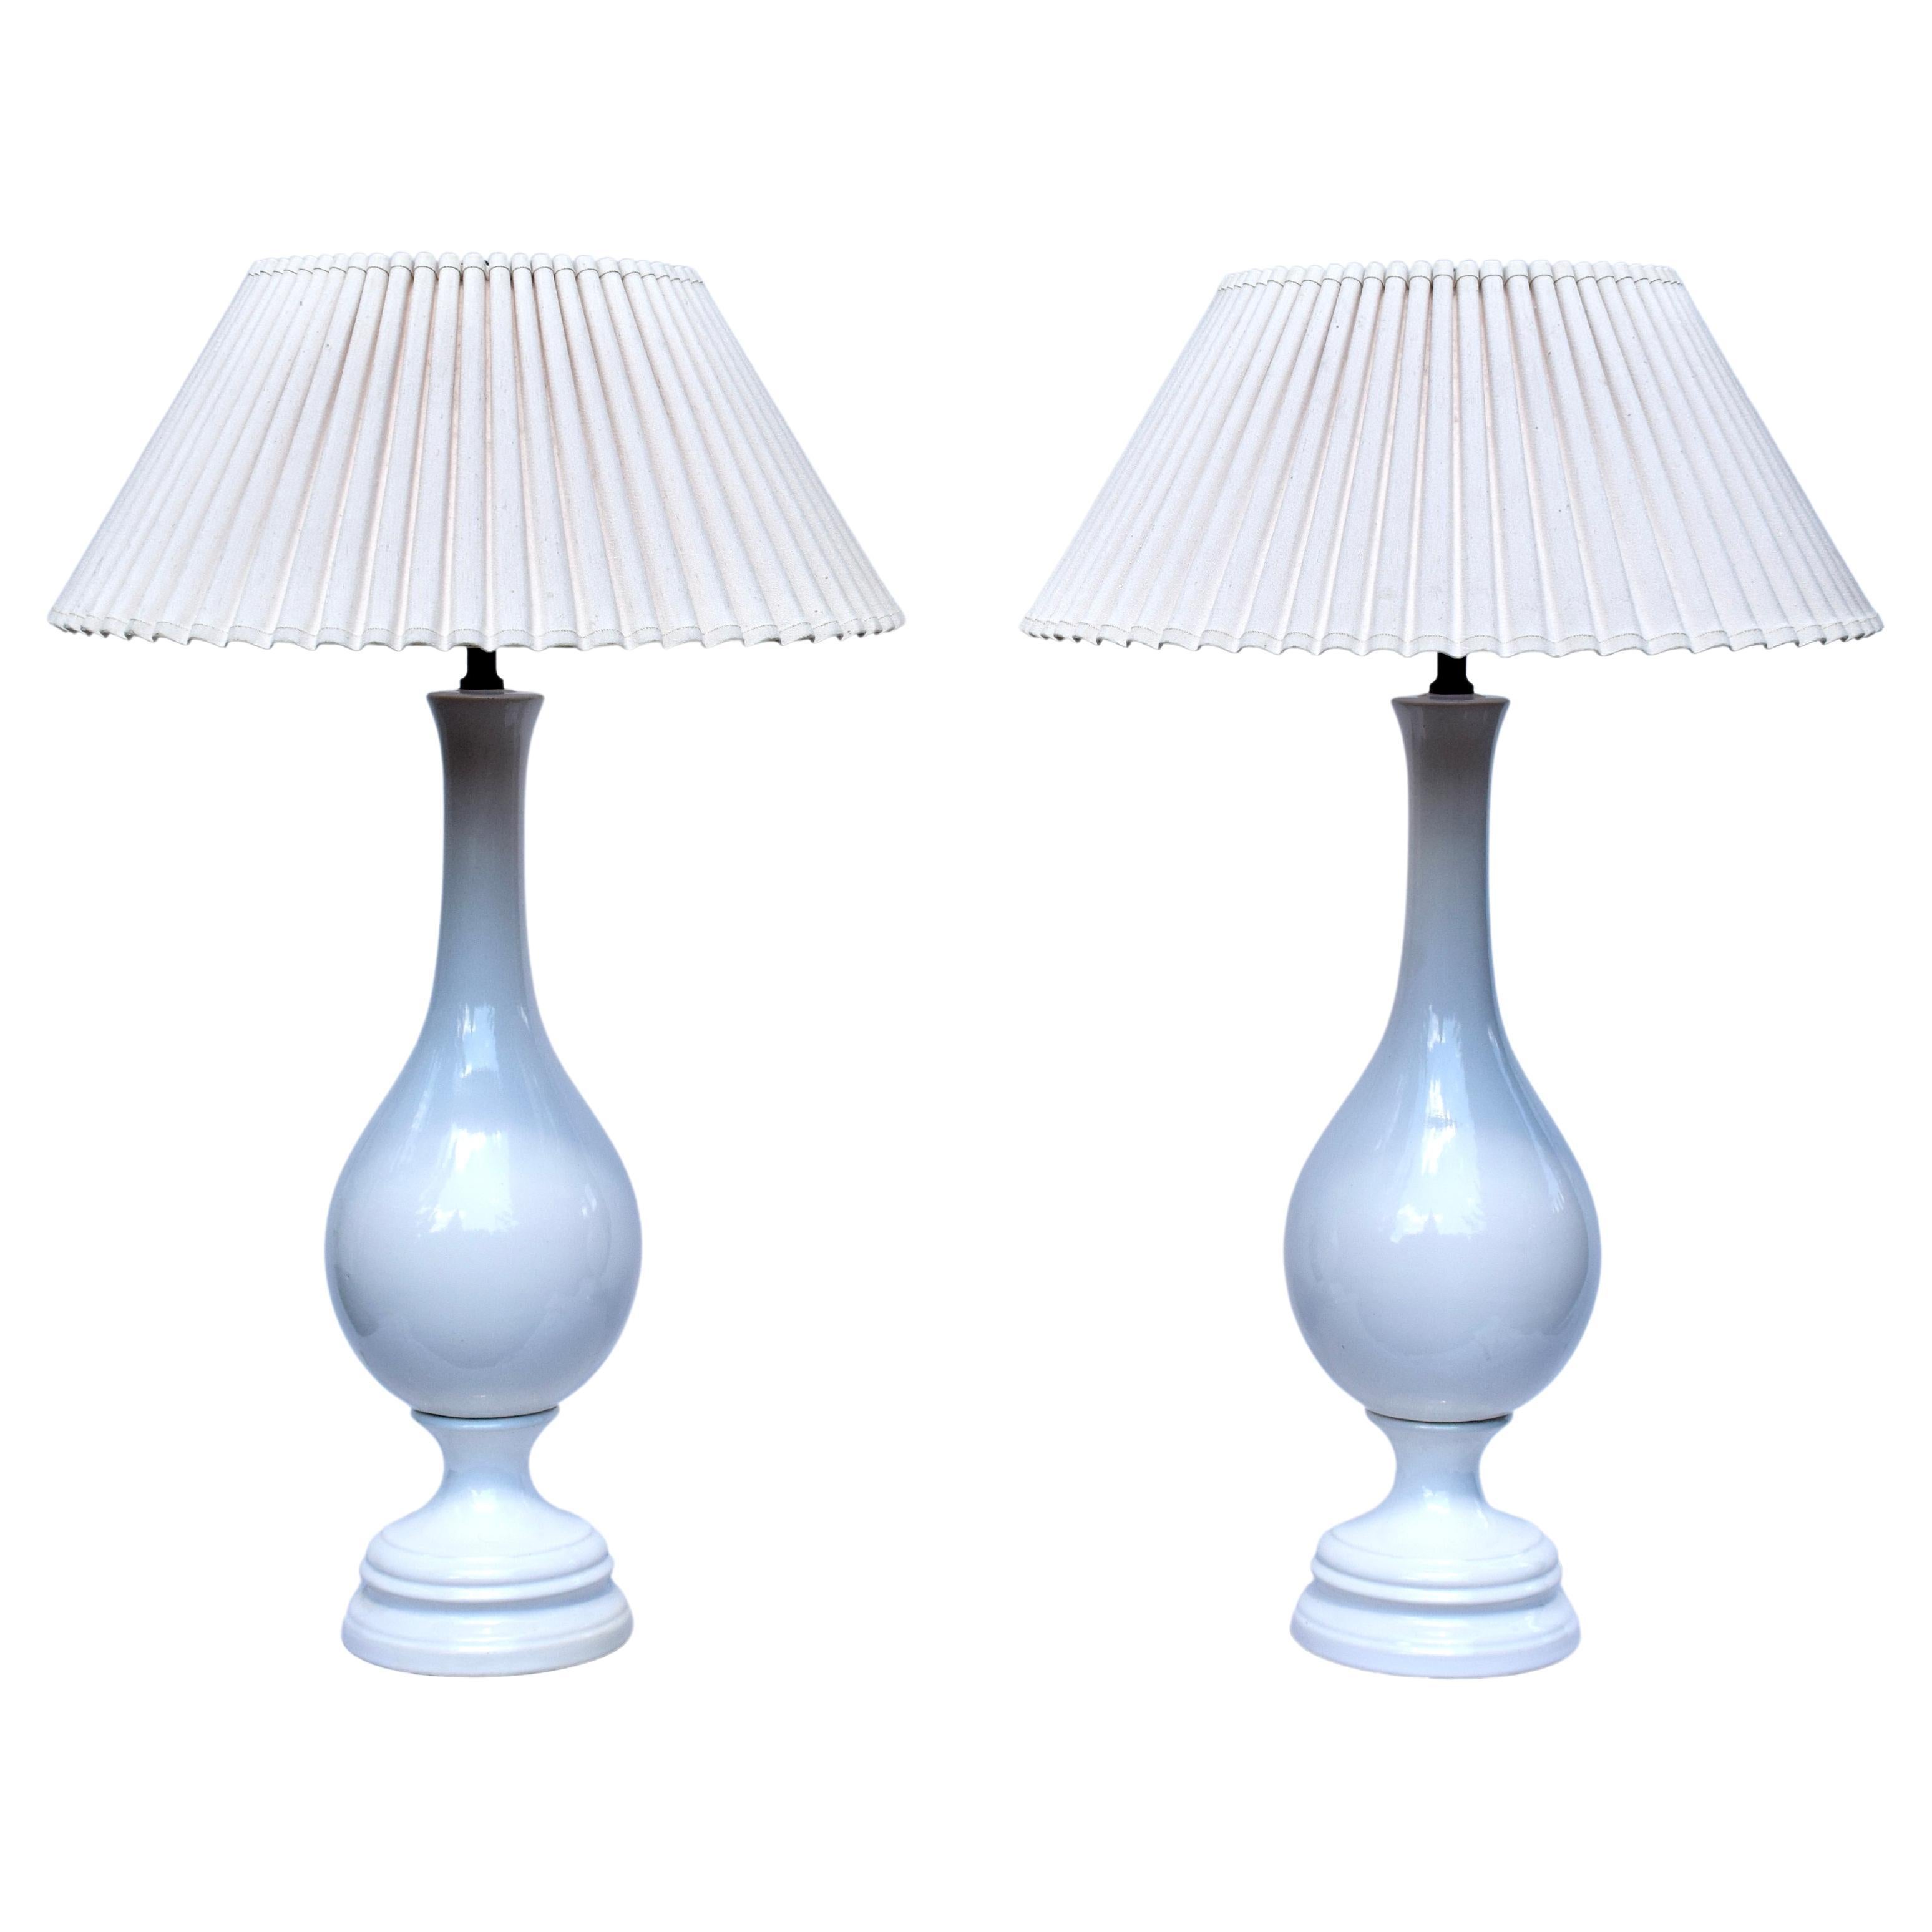 Mid 20th Century White Porcelain Vase Table Lamps, Pair